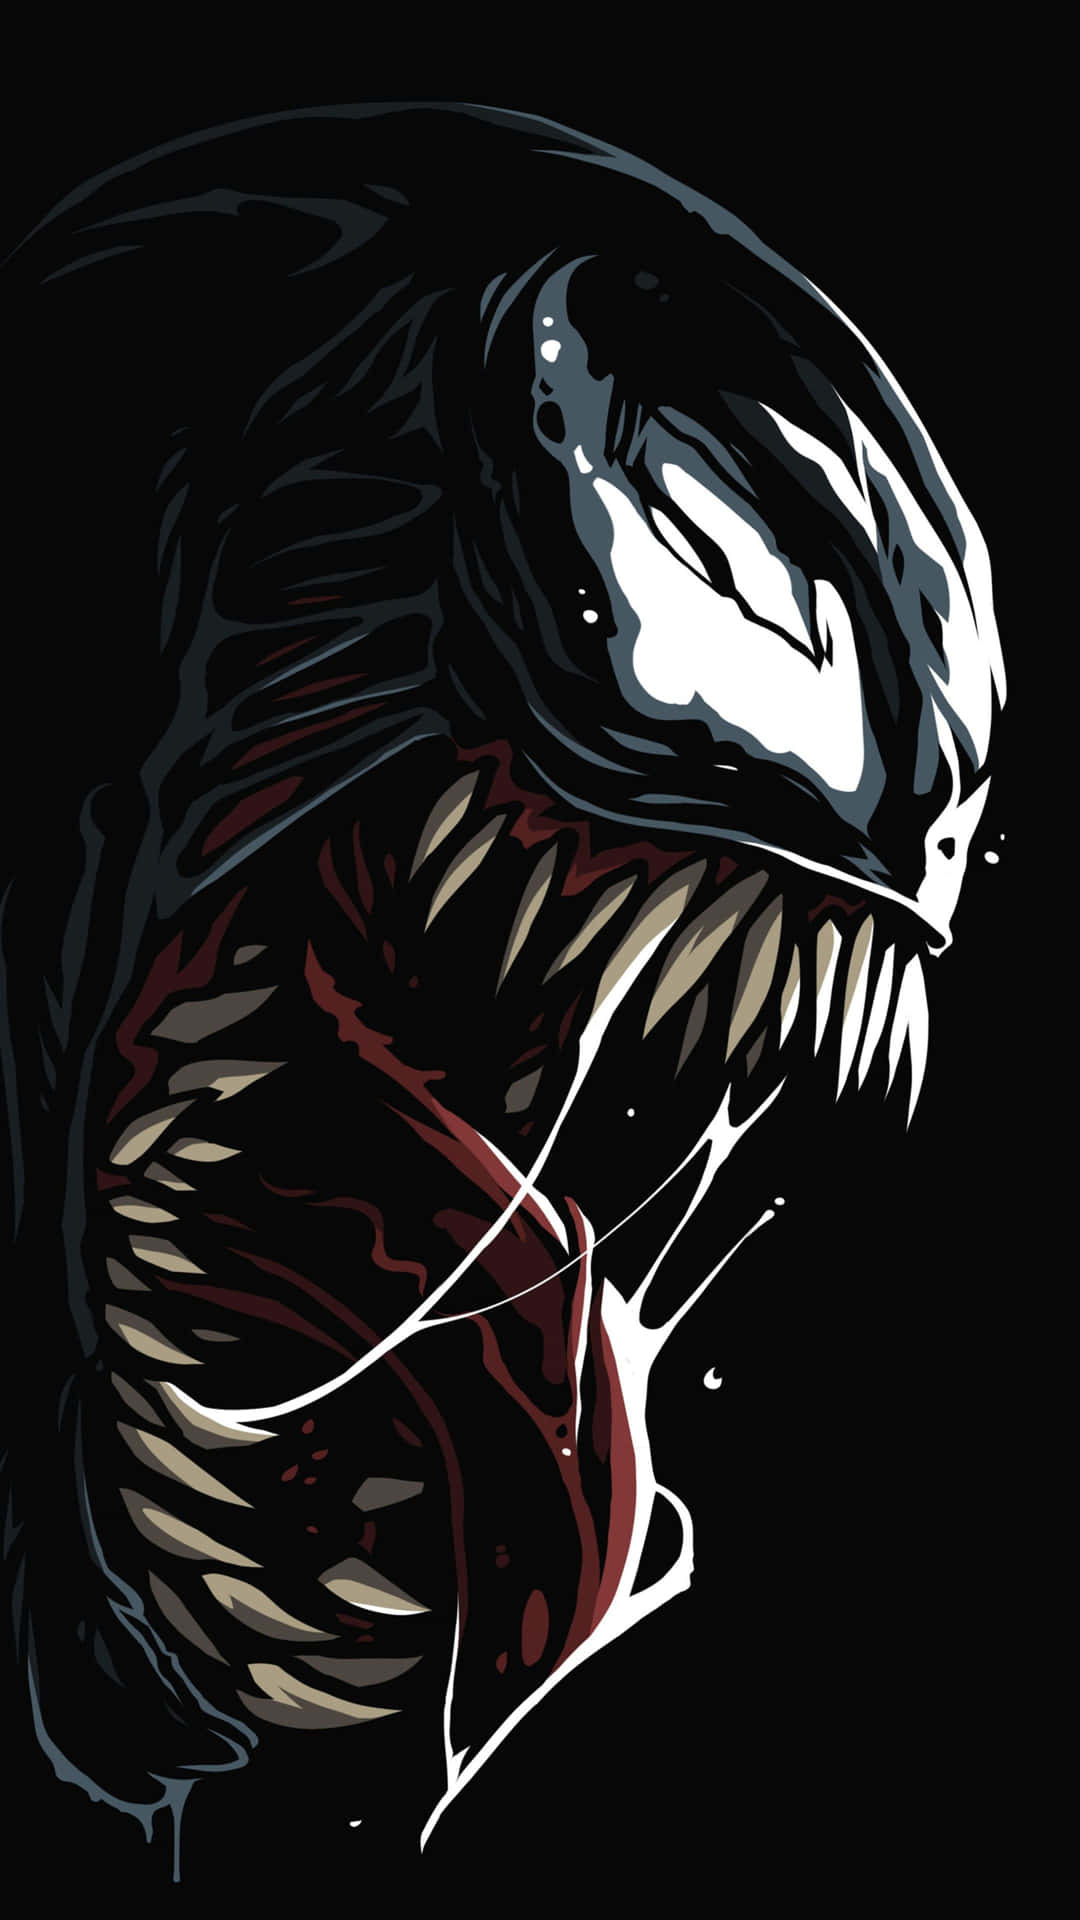 Intense Venom Comic Book Art Wallpaper